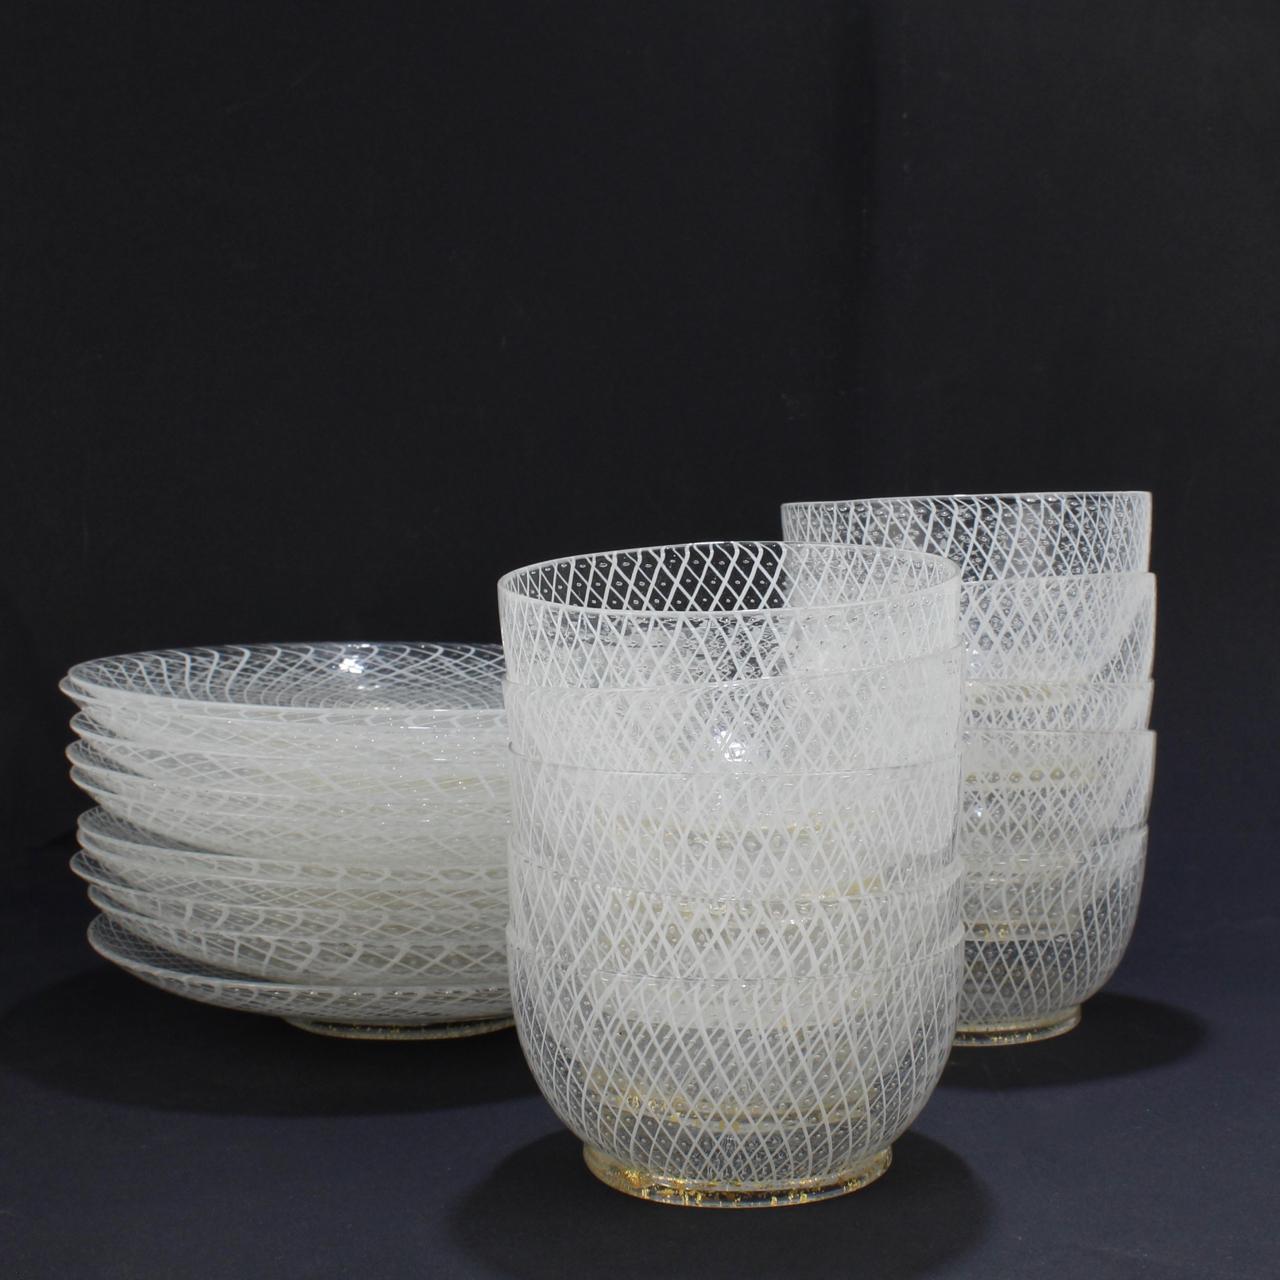 Italian Set of 10 Venetian or Murano Glass Reticulo Filigrana Bowls and Plates